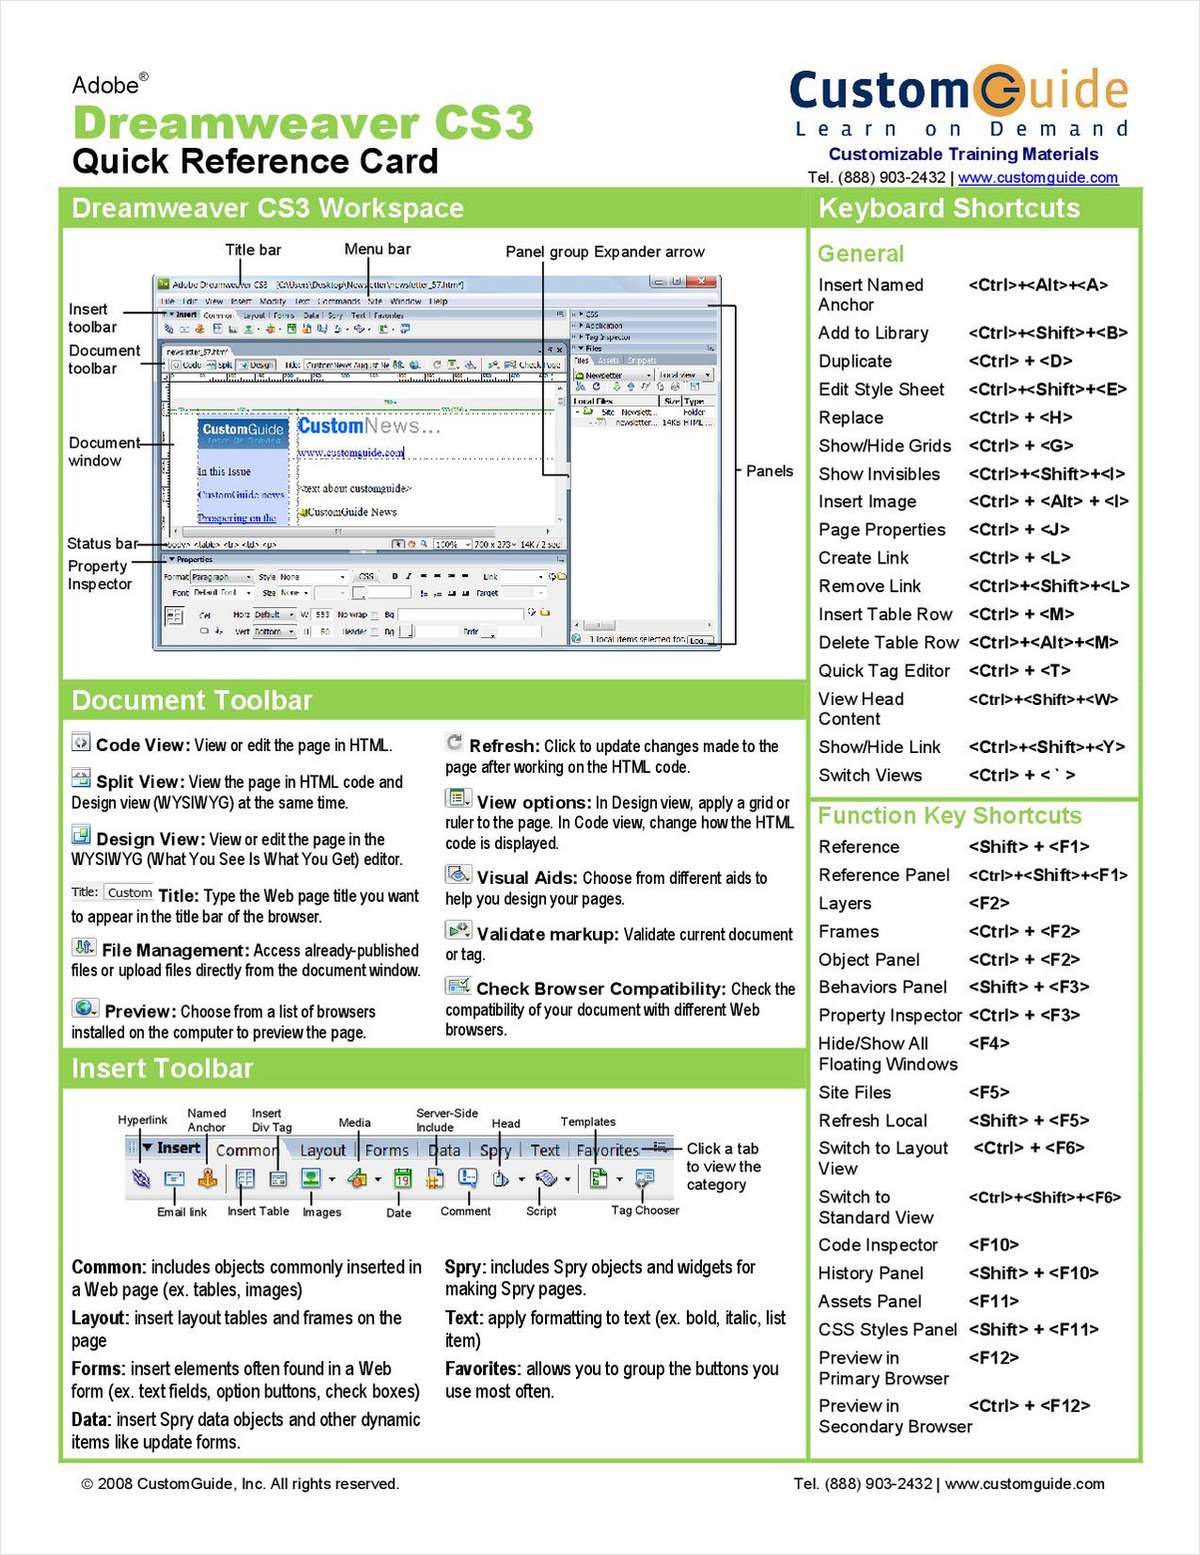 Dreamweaver CS3 - Free Quick Reference Card